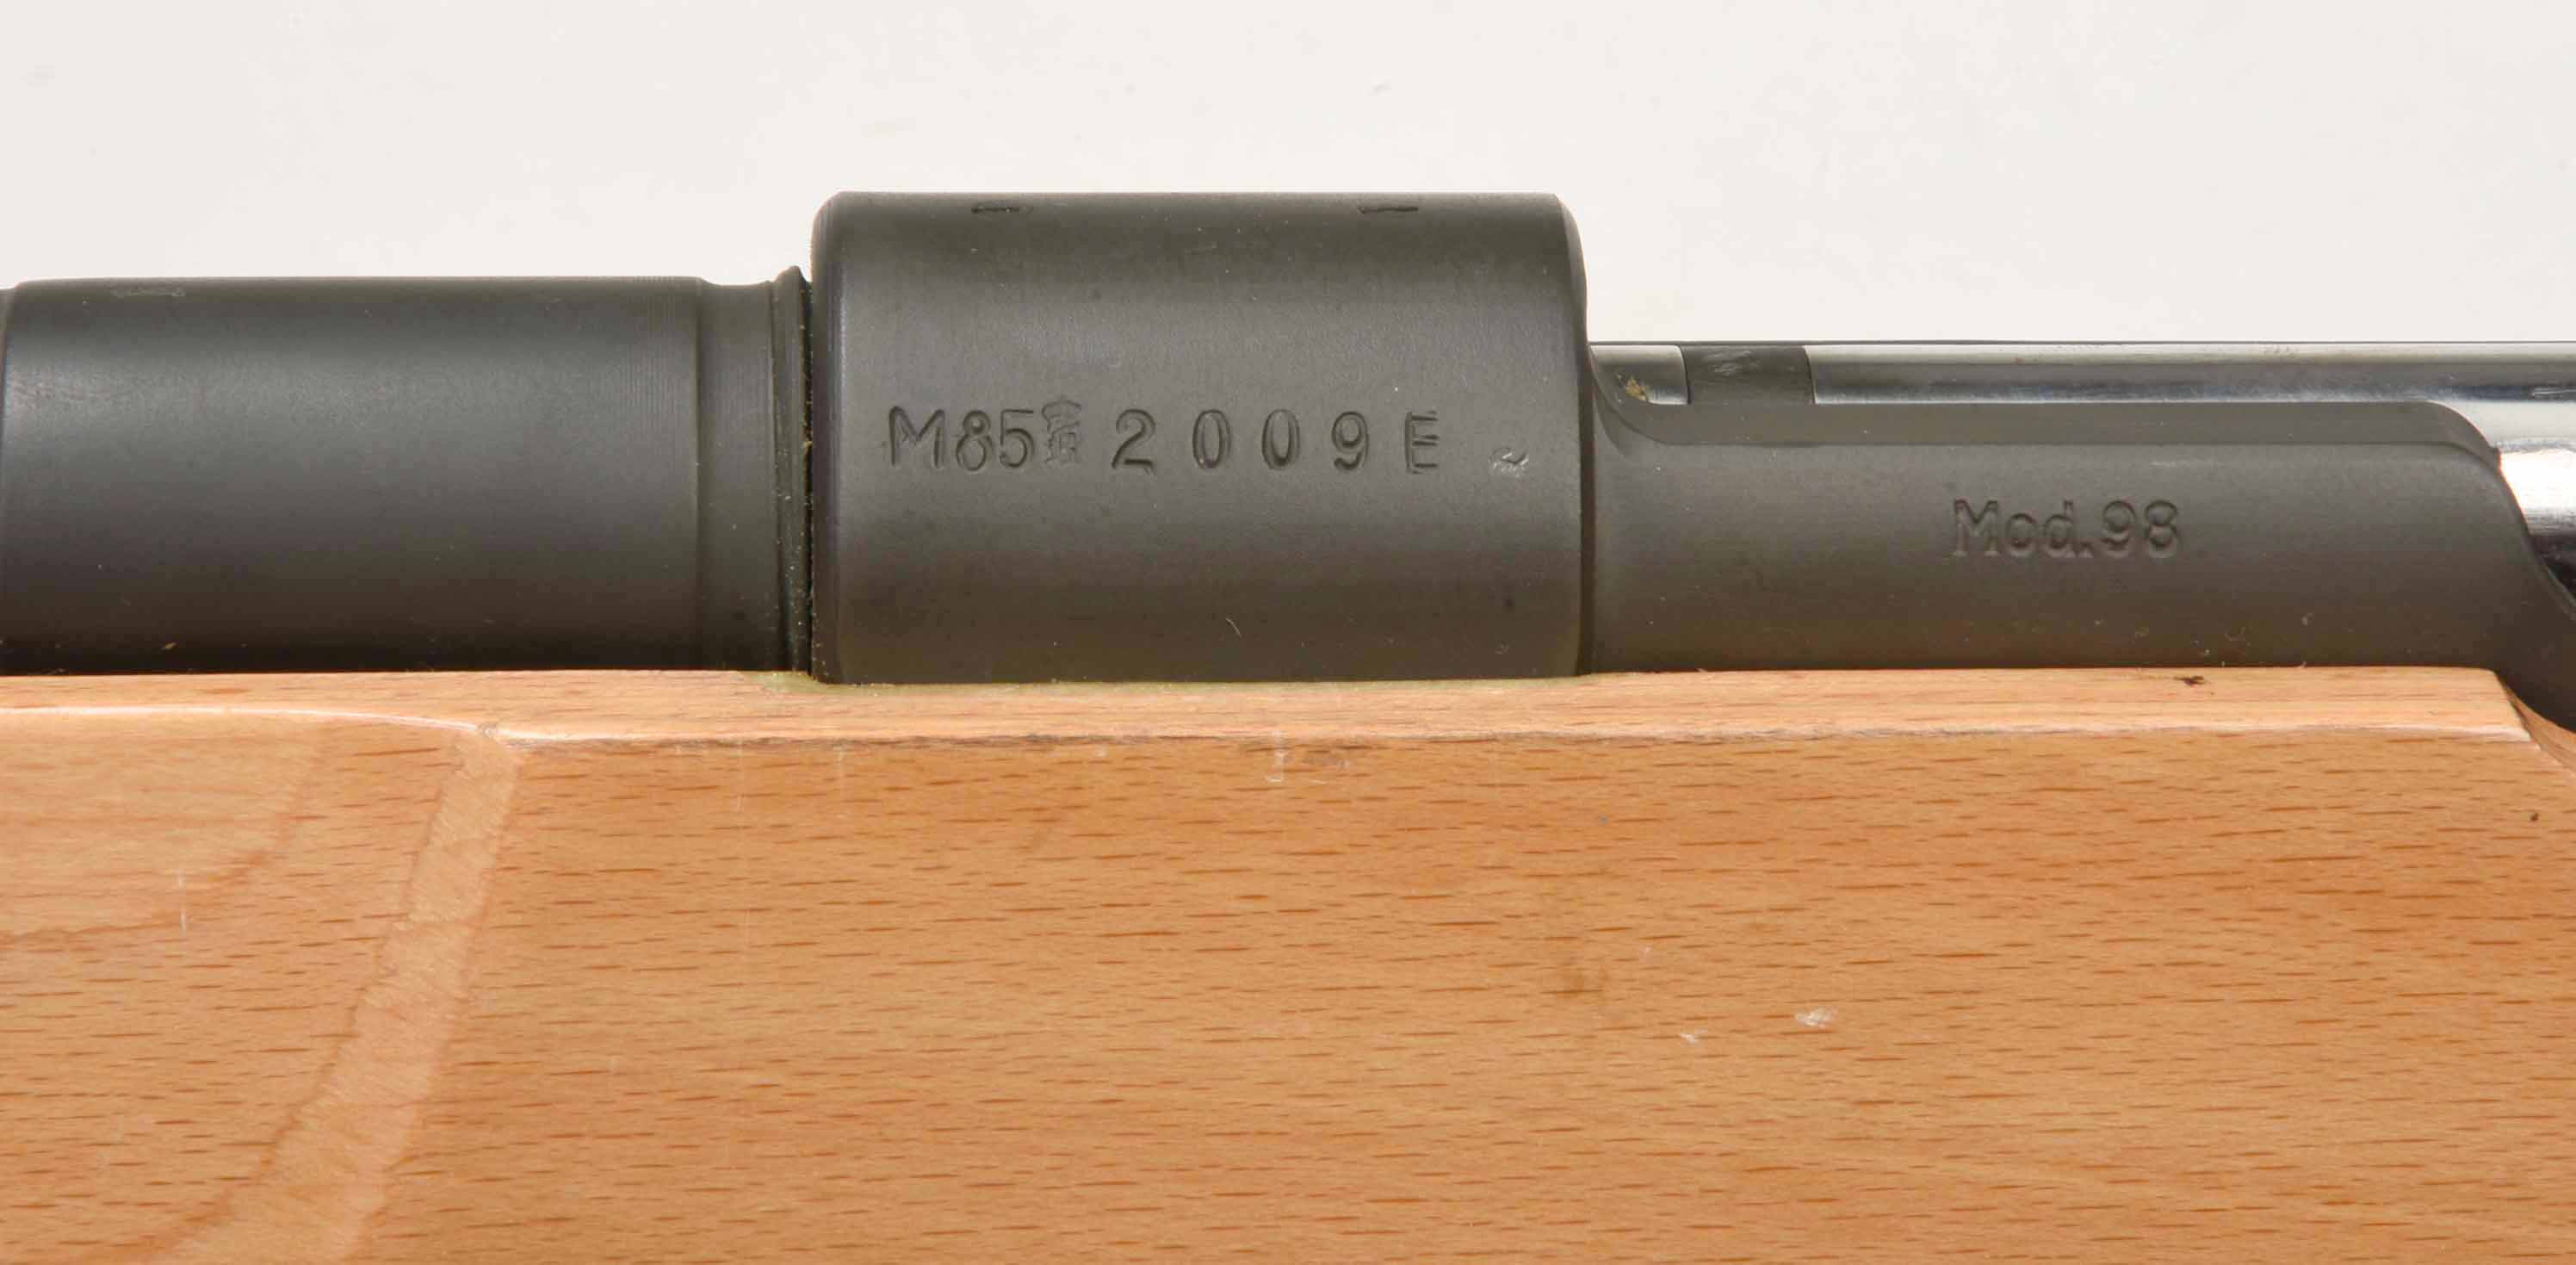 ./guns/rifle/bilder/Rifle-Kongsberg-M85-2009E-5.jpg